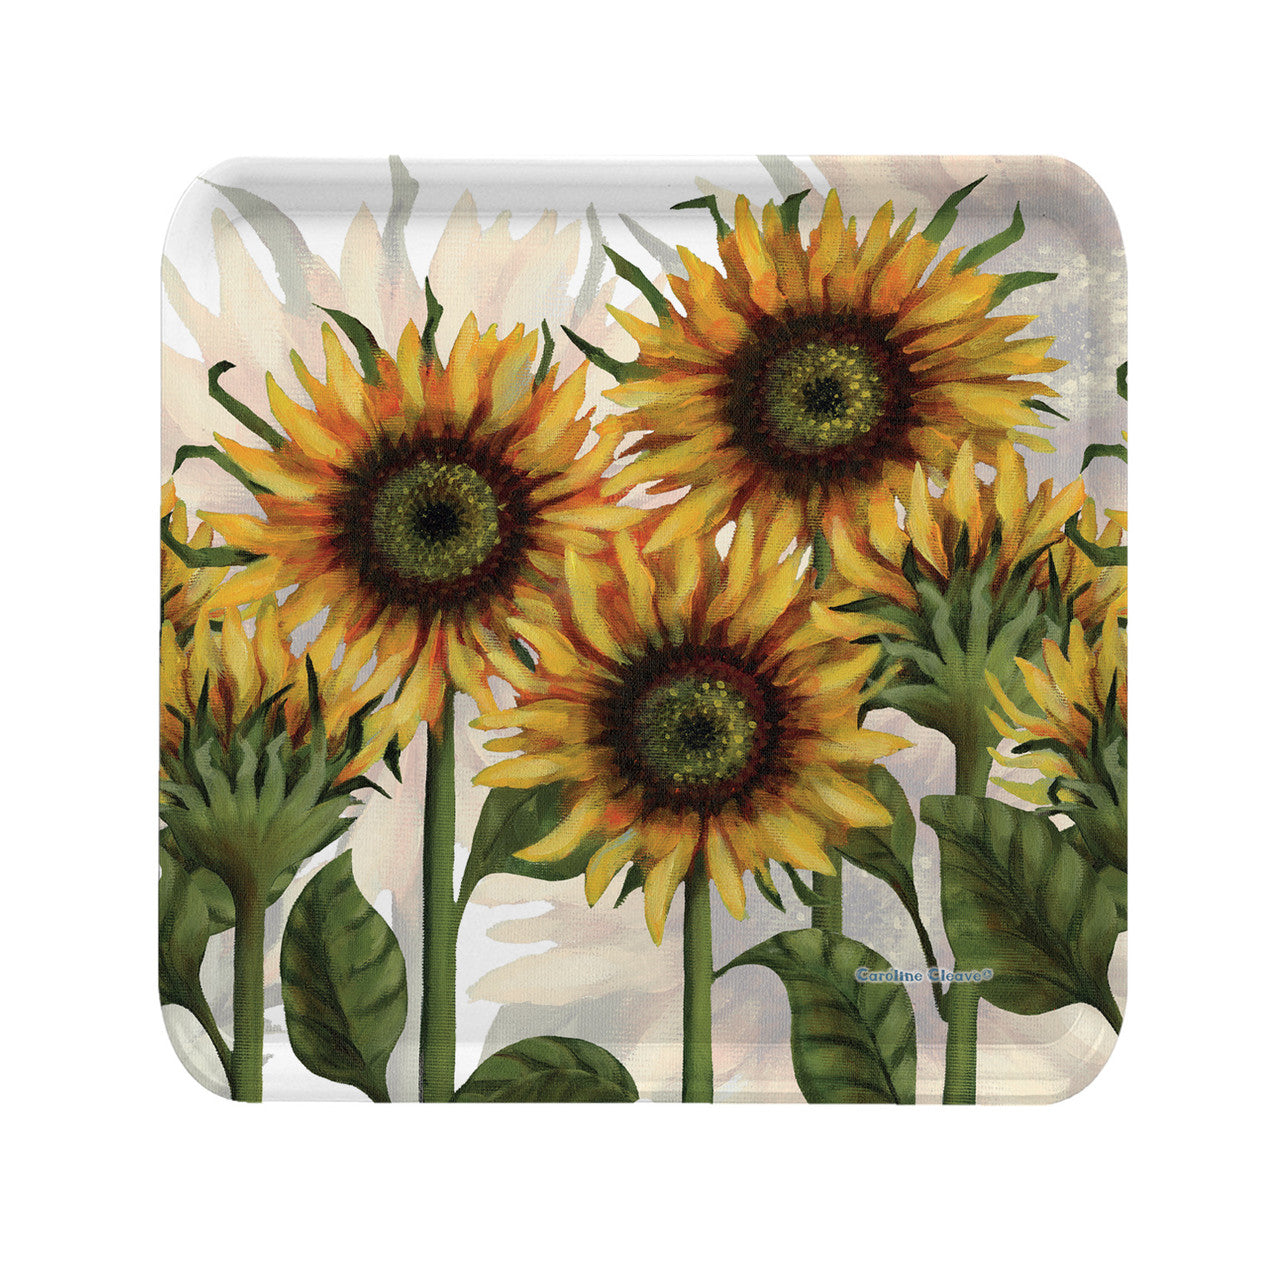 Caroline Cleave Sunflowers Melamine Square Tray